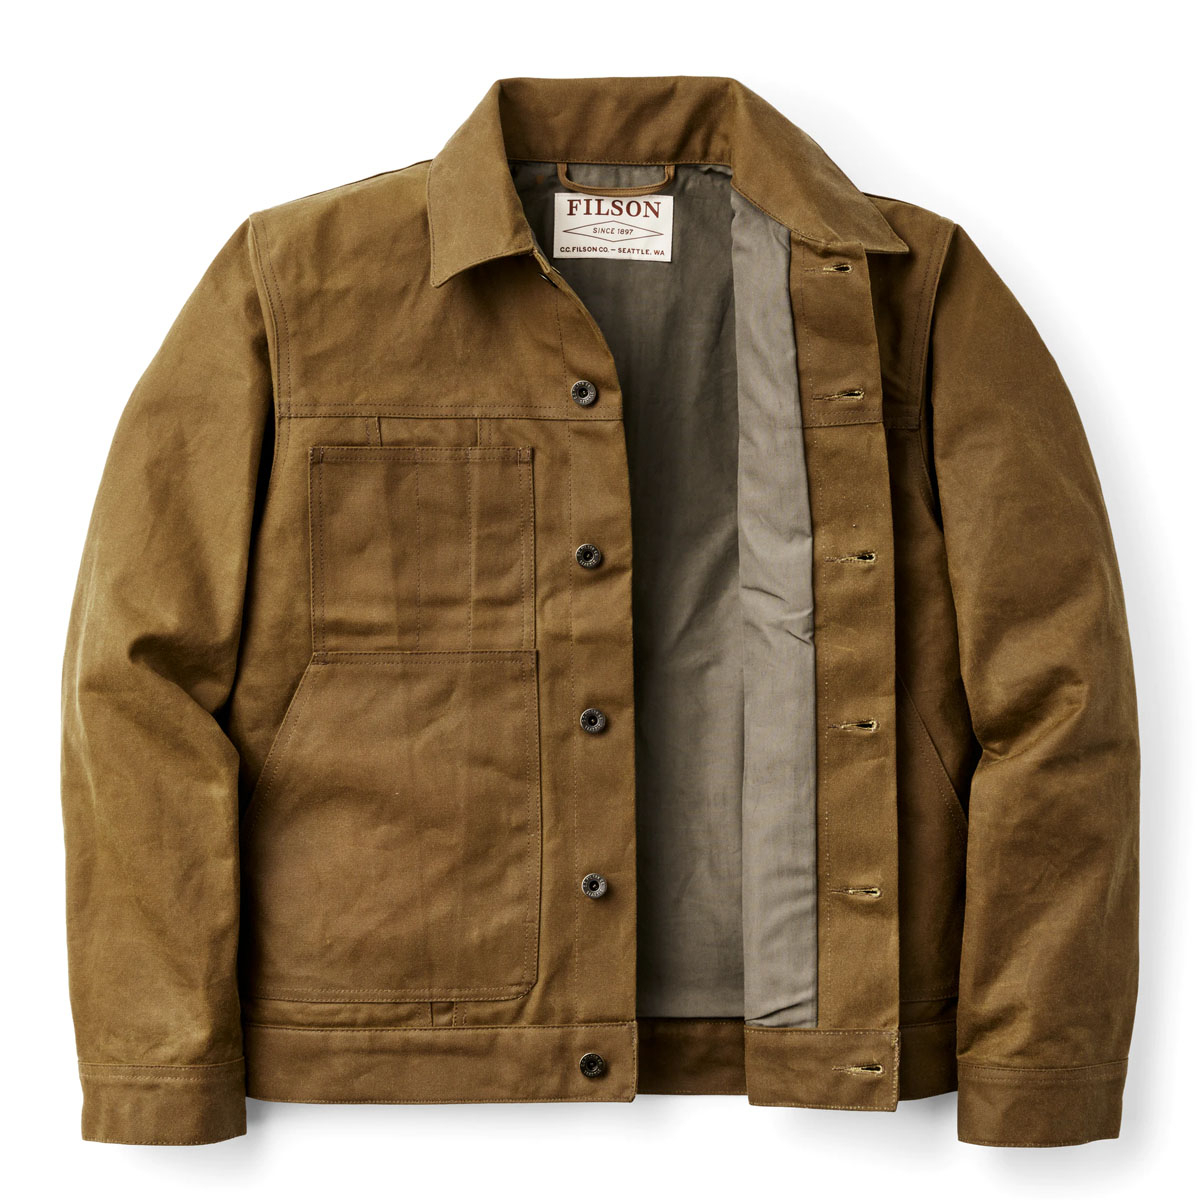 Filson Tin Short Lined Cruiser Jacket Dark Tan, tough work jacket